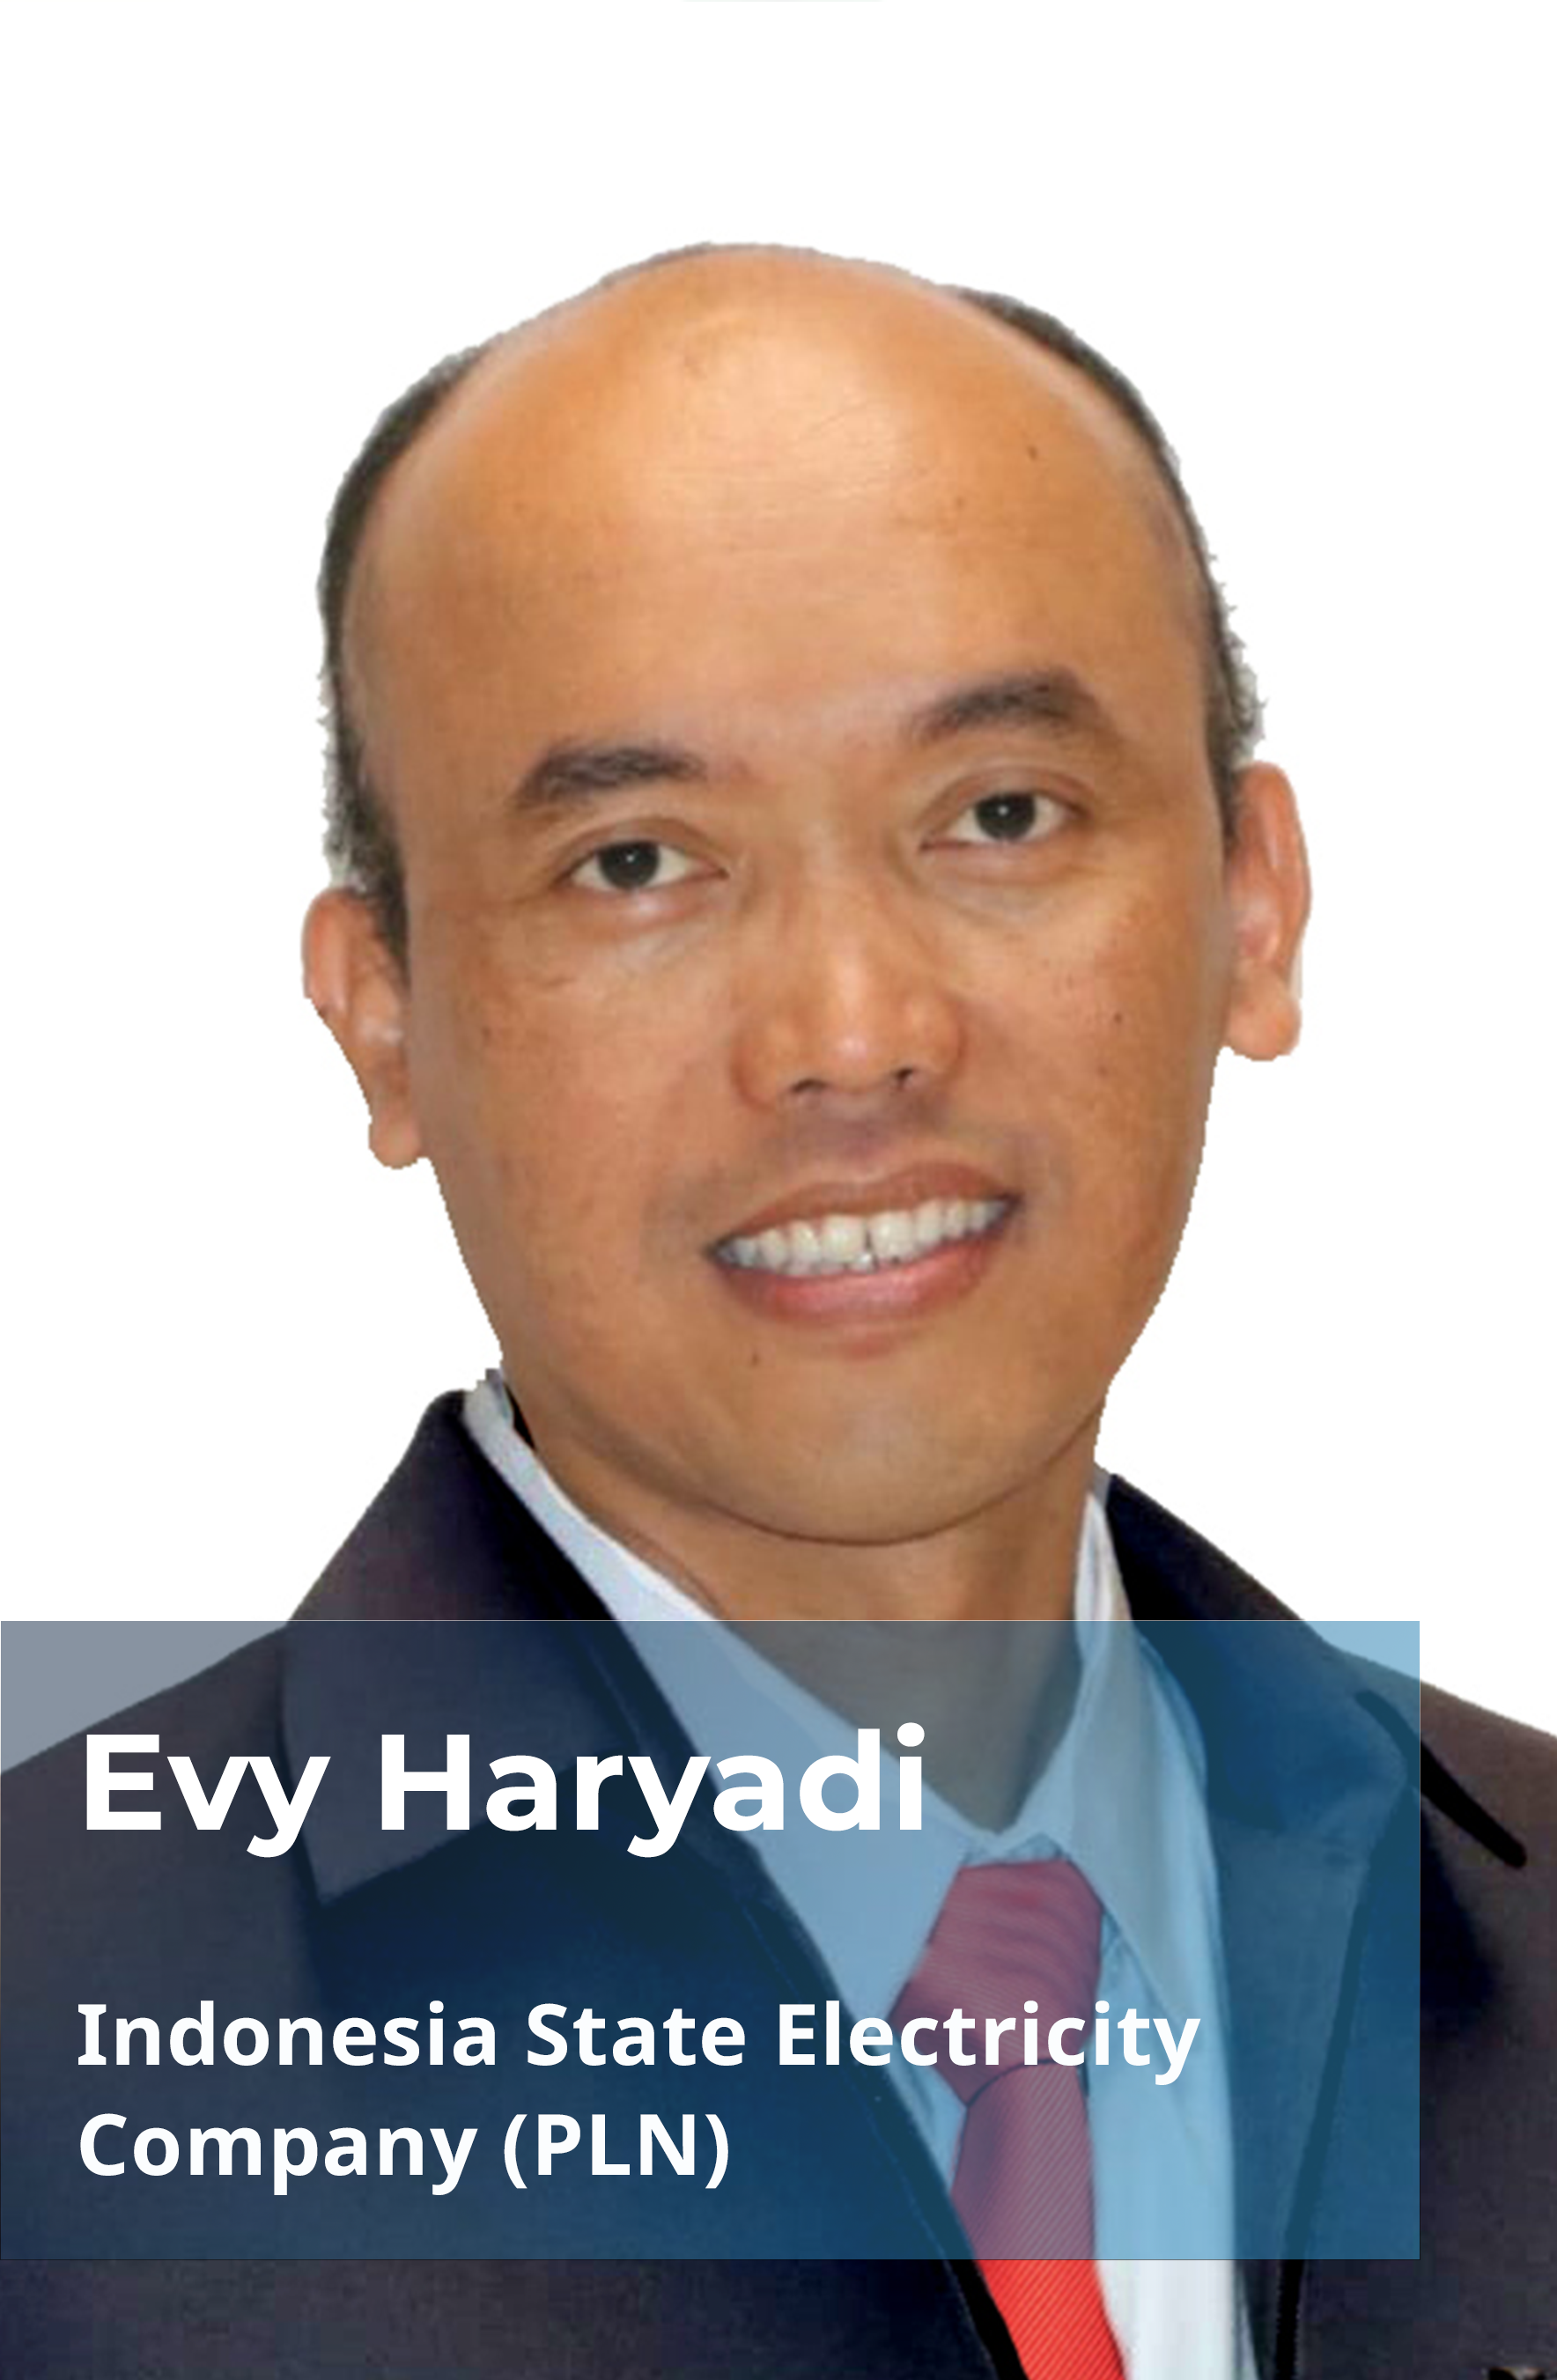 Evy Haryadi